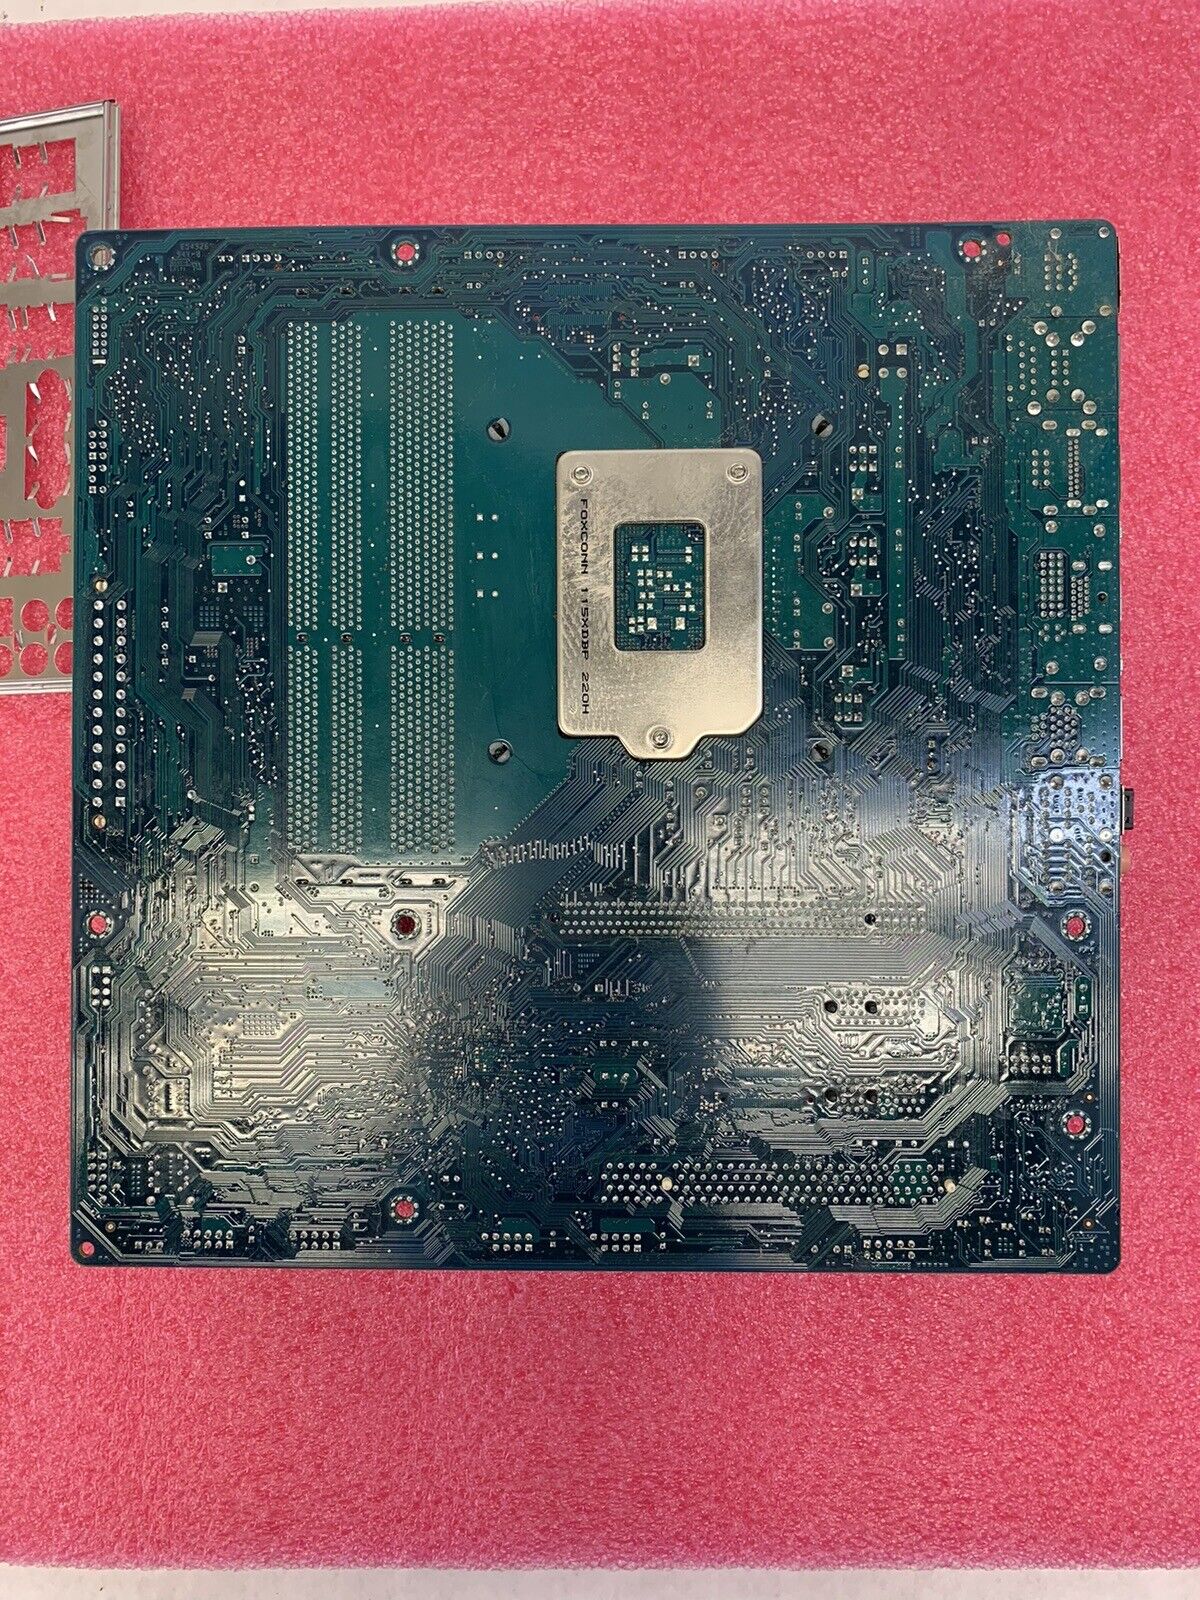 Intel DH67GD Motherboard Intel Core i3-2120 3.3GHz 4GB RAM w/Shield